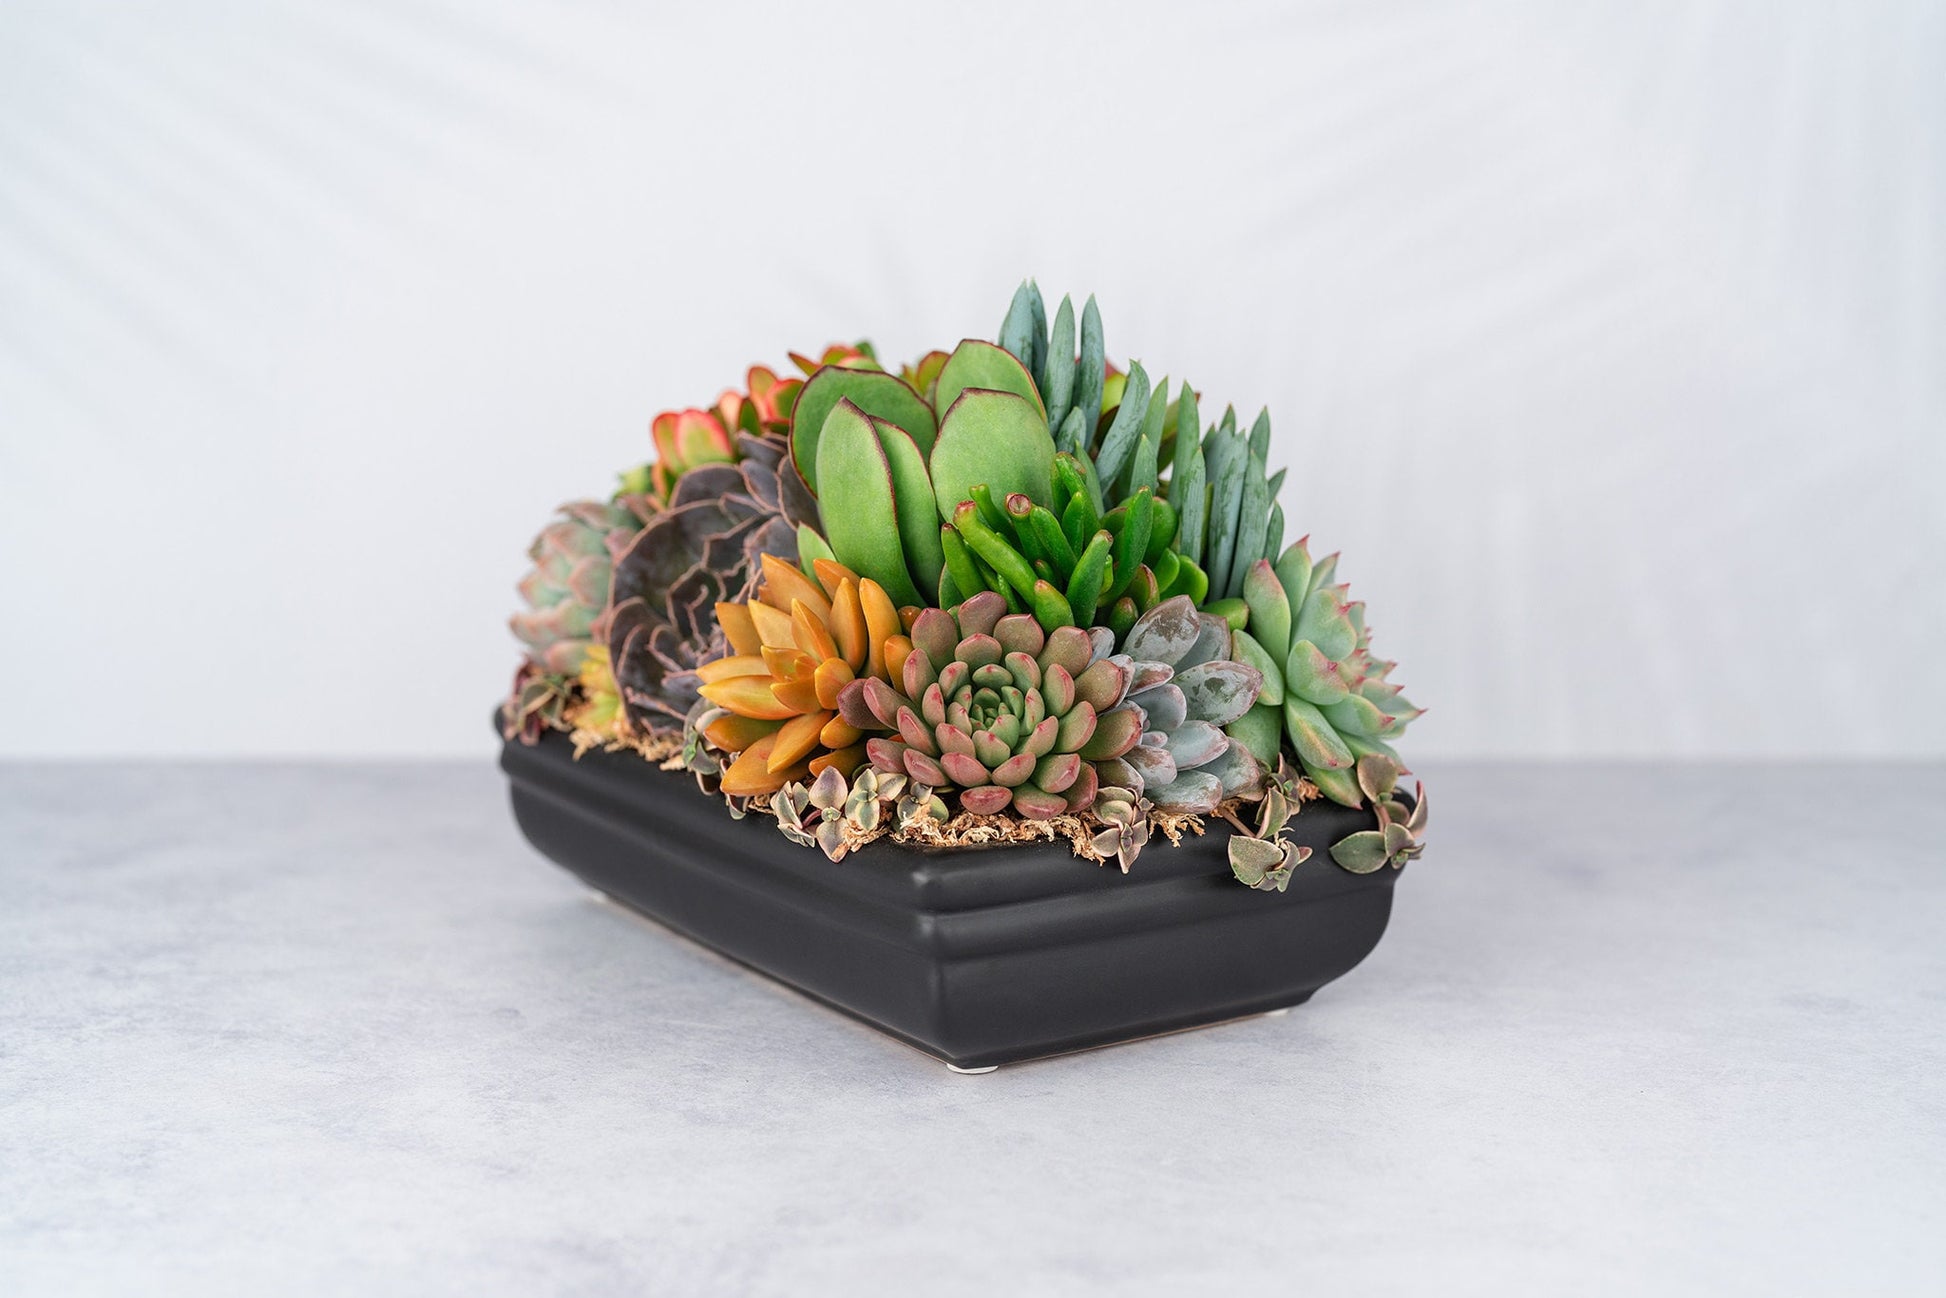 Low Profile Blac Succulent Arrangement Planter: Modern Living Succulent Gift in Ceramic Container, Centerpiece for Weddings & Events